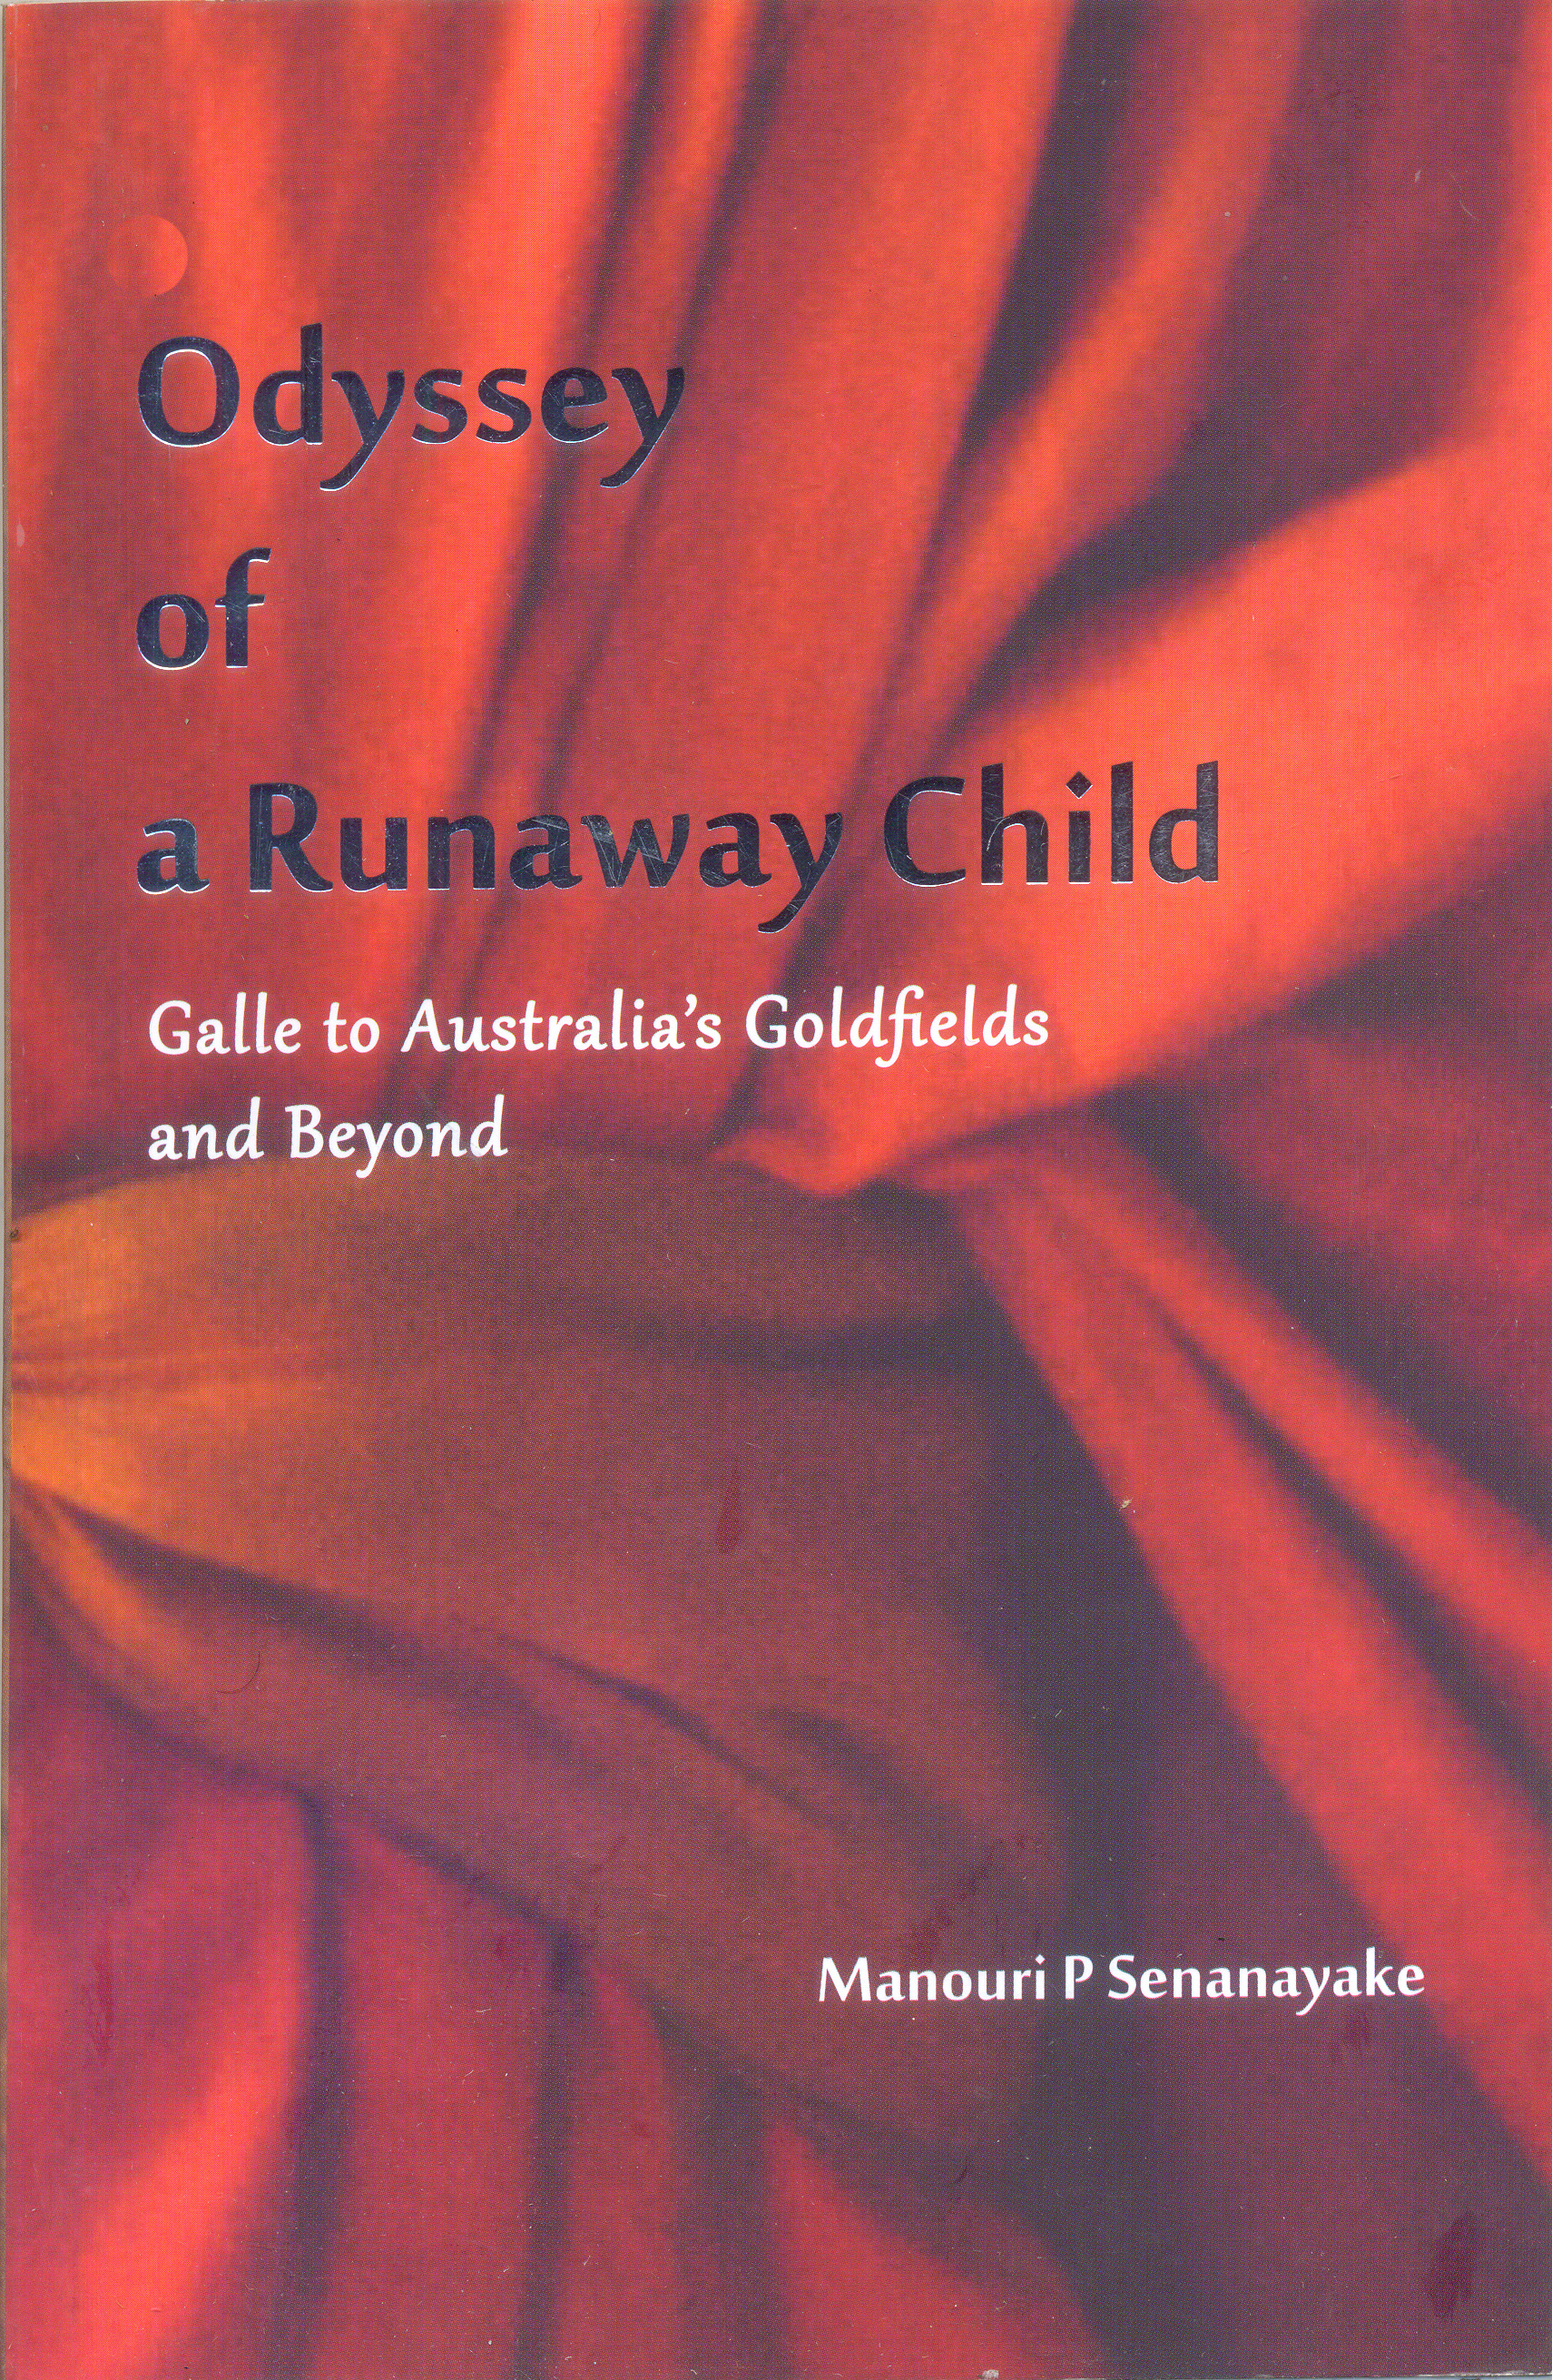 Oddyssey Of a Runaway Child